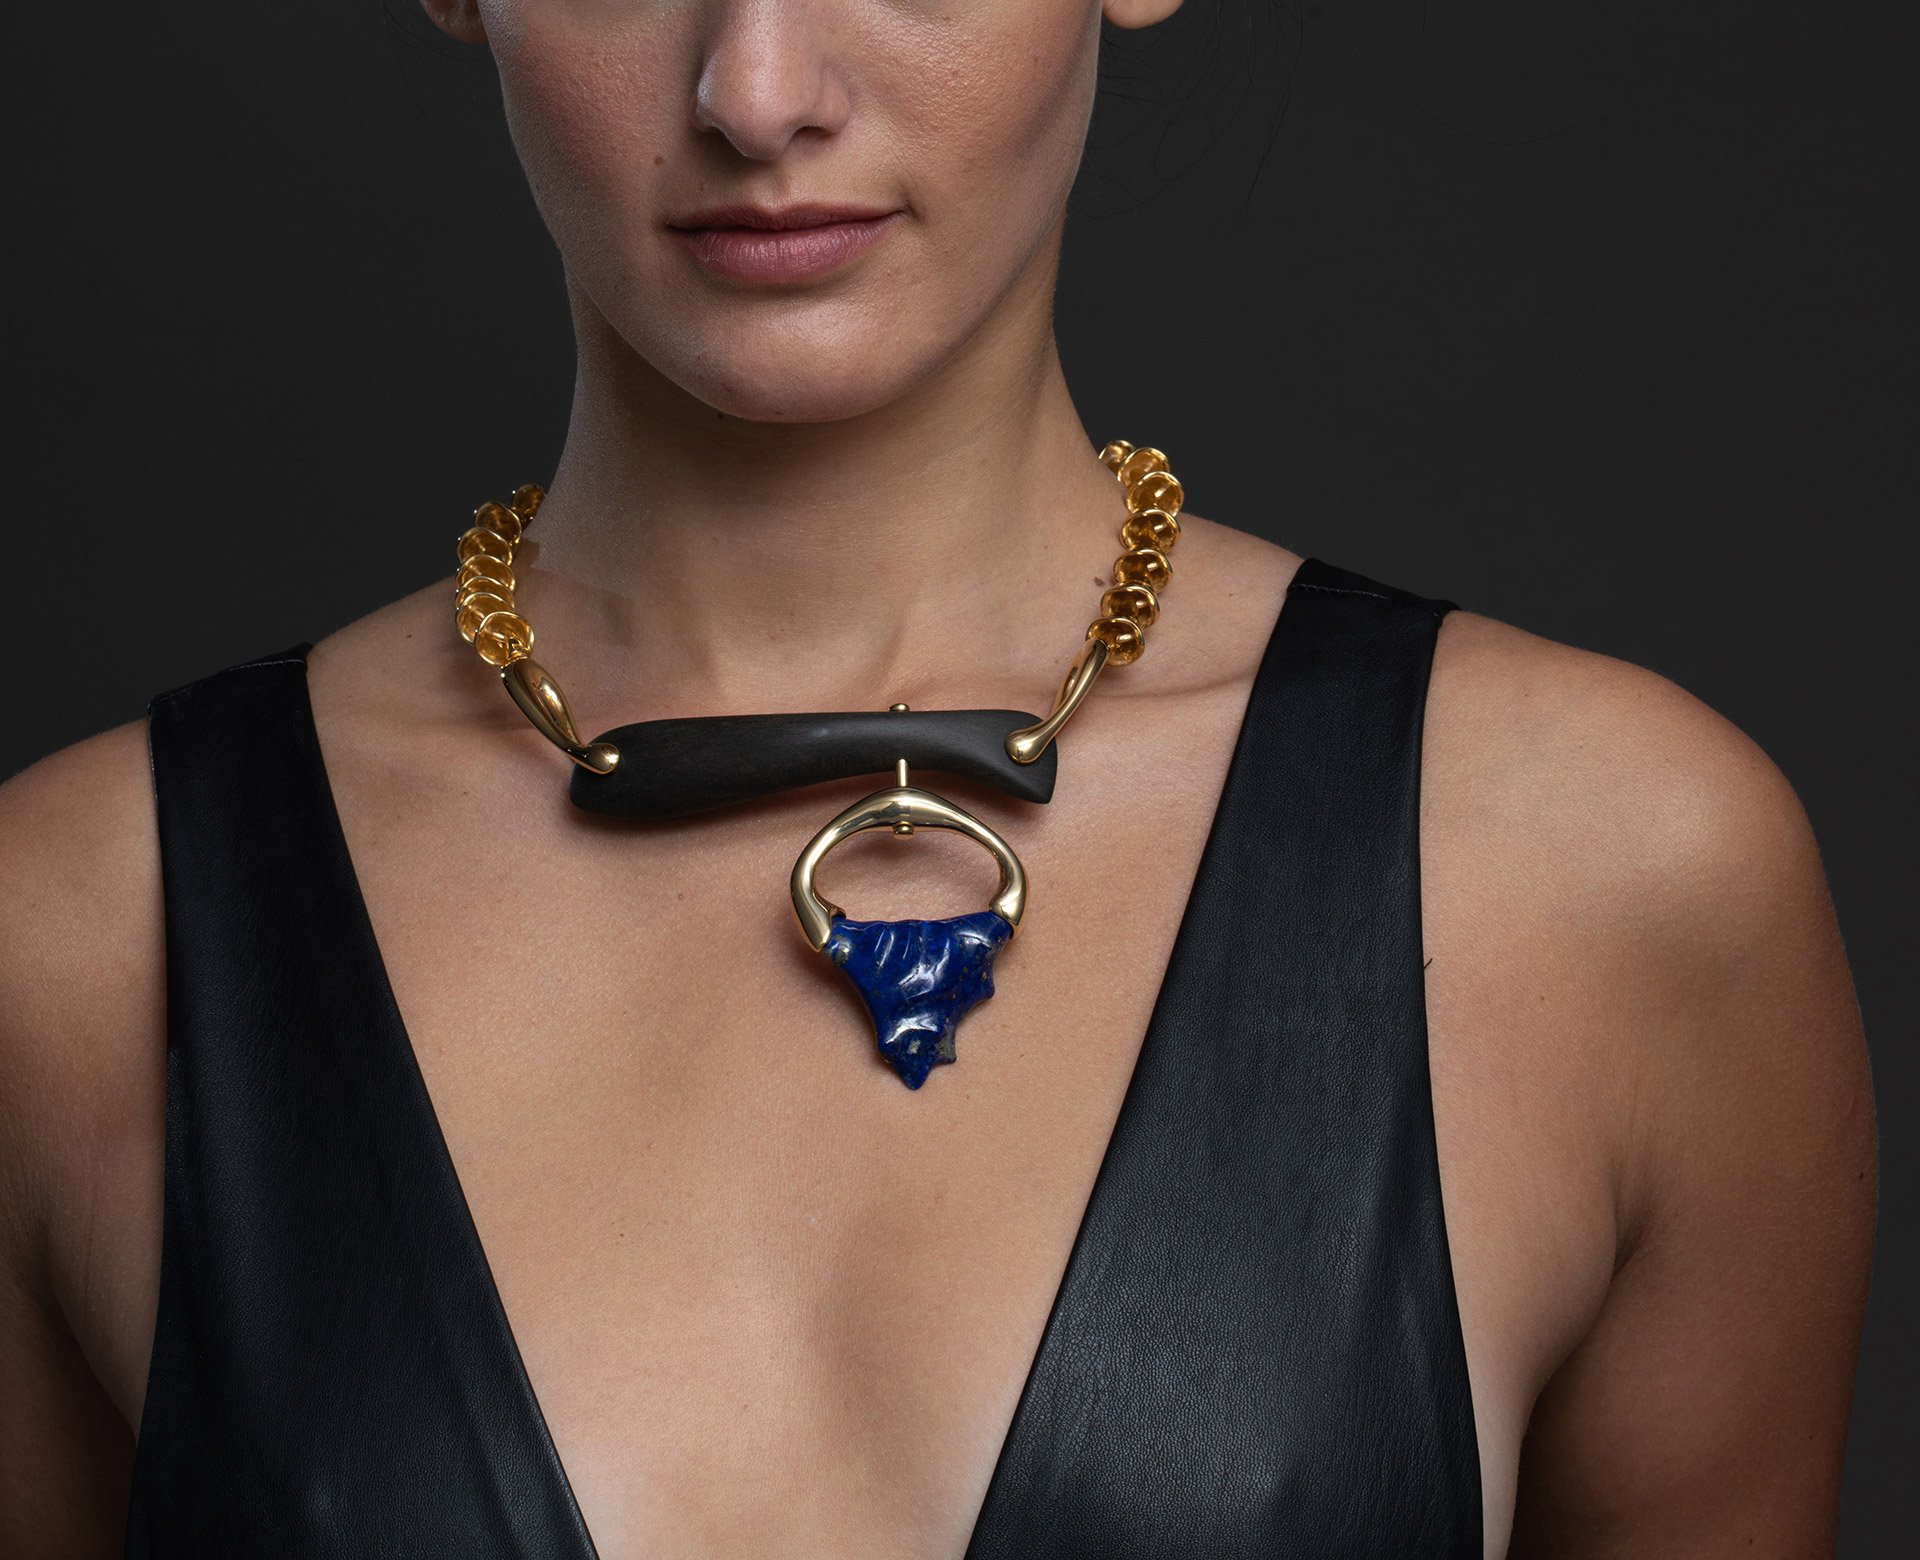 BULL-SKULL-egypt-necklaces-collection-julio-martinez-barnetche-marion-friedmann-gallery-LR-egypt139-new-cut.jpg